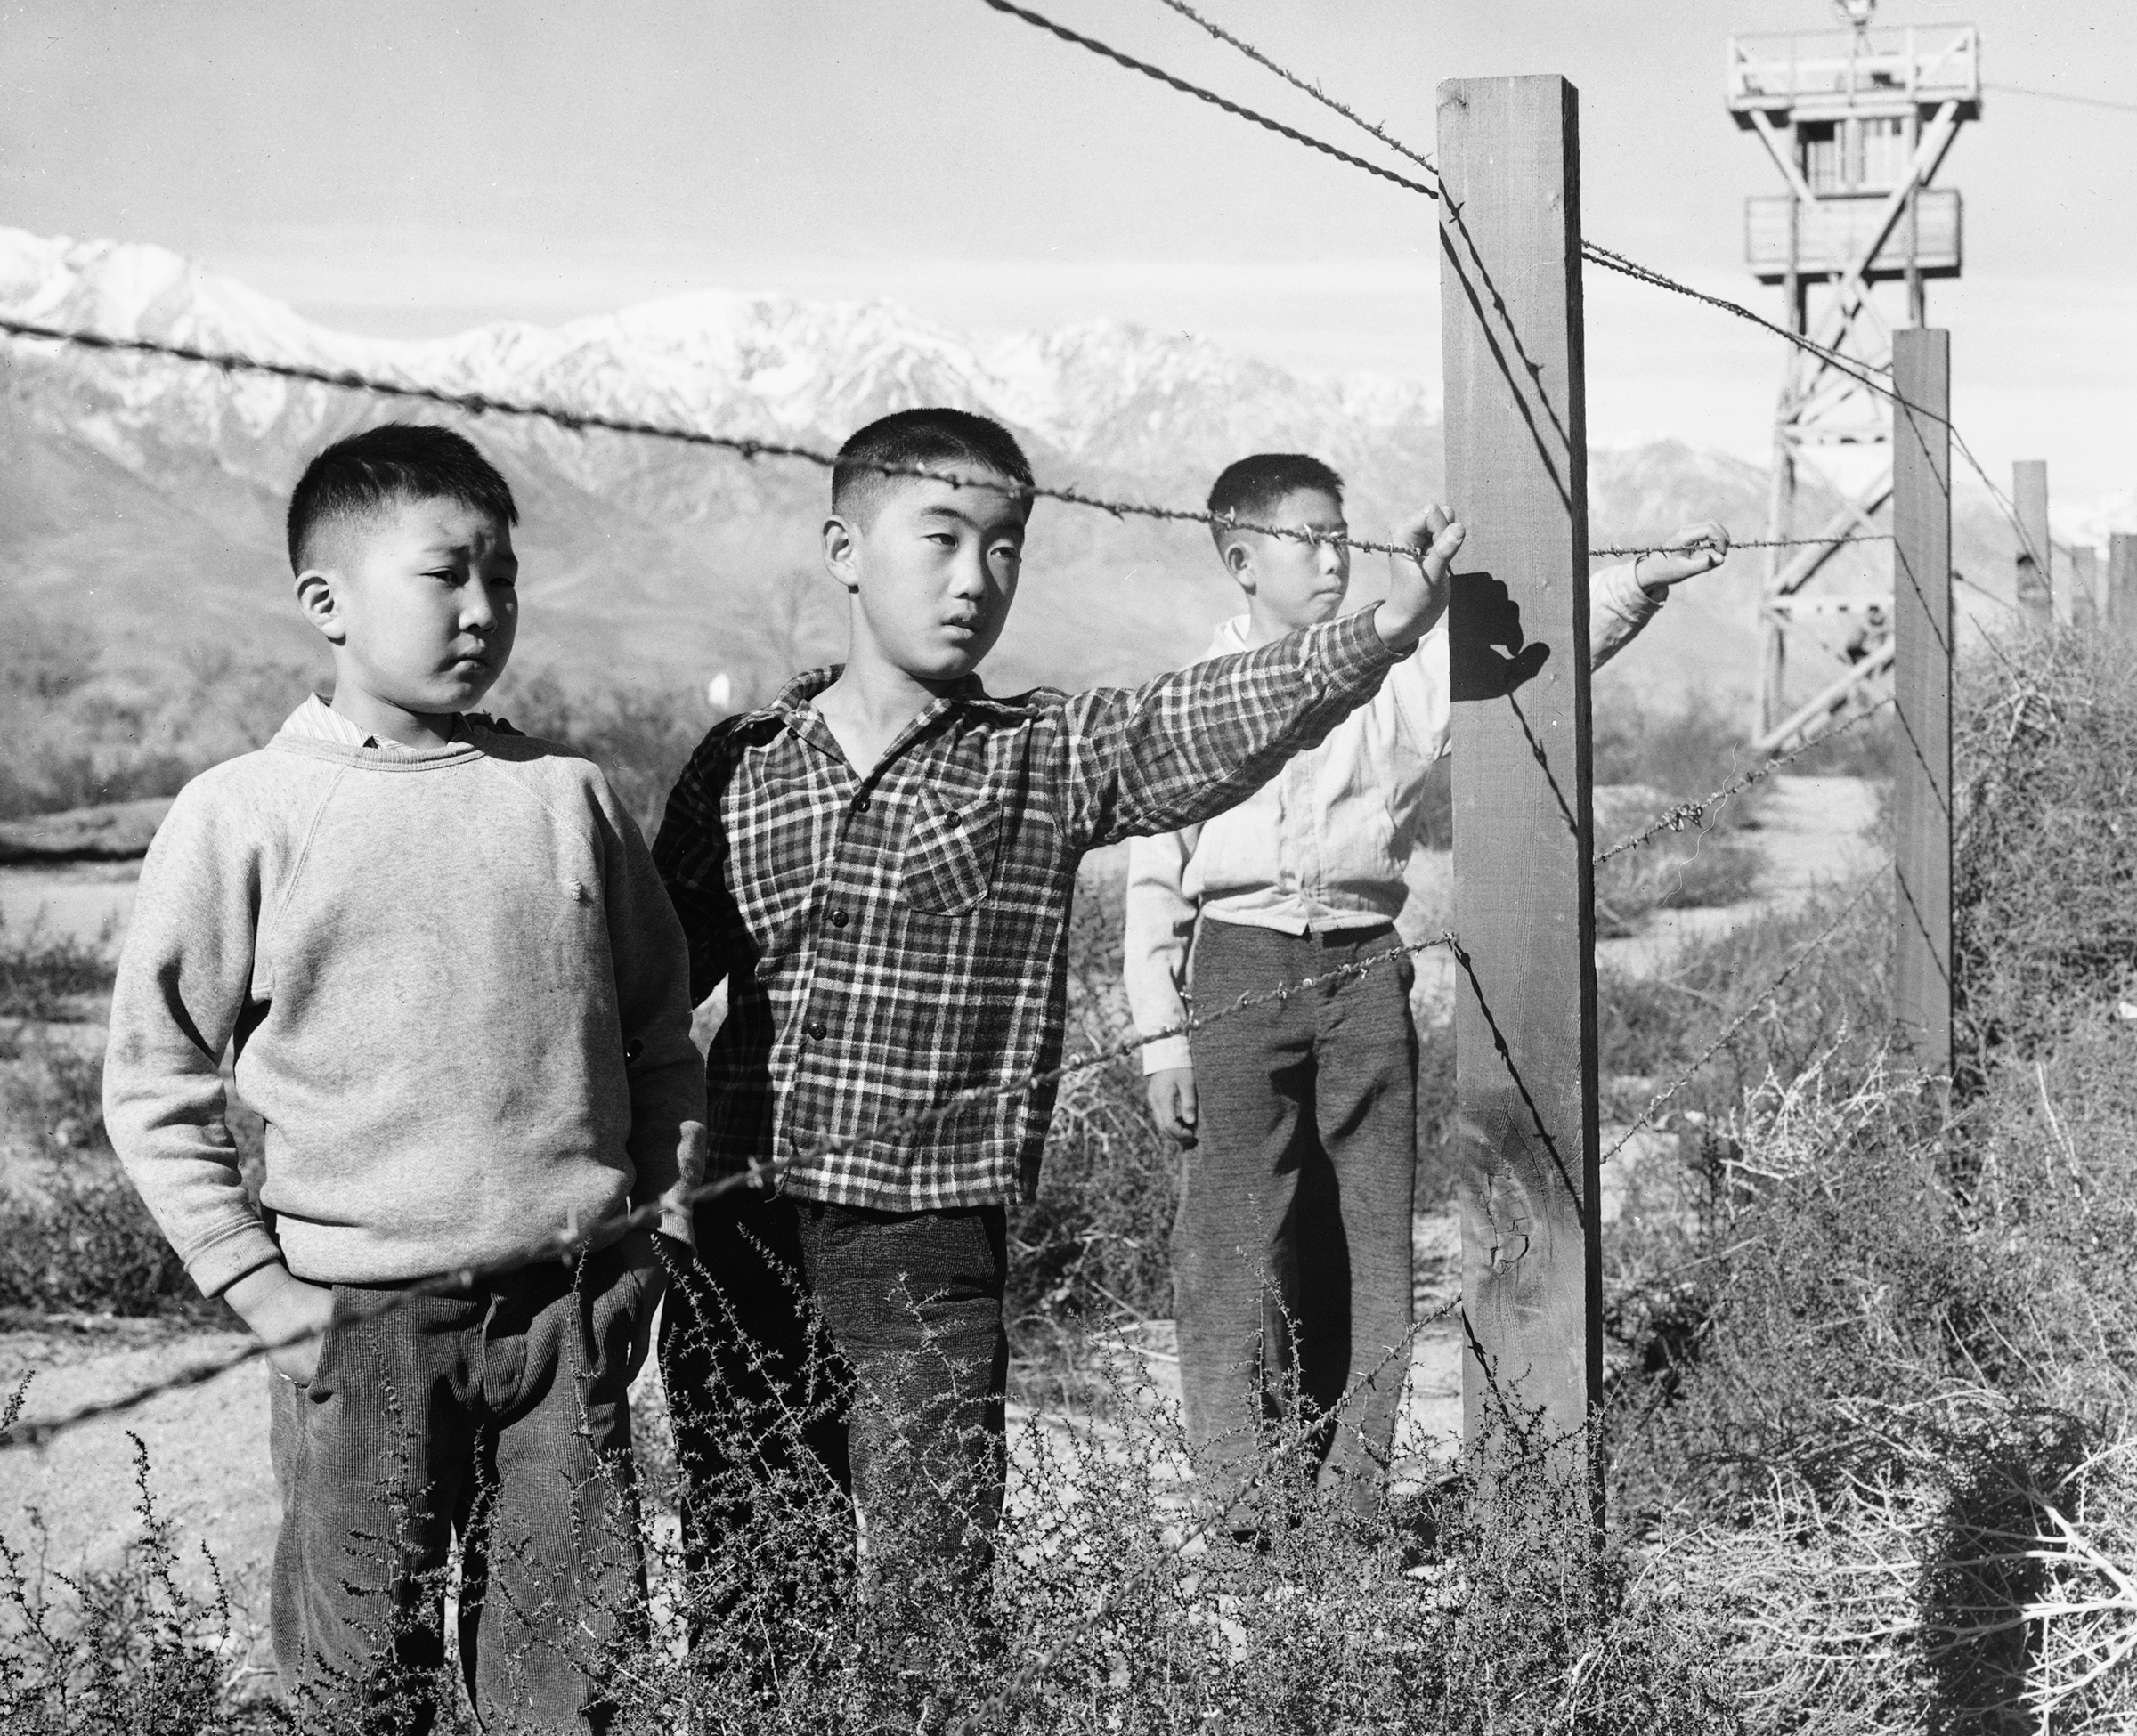  Toyo Miyatake, Three Boys Behind Barbed Wire, 1944
All photographs courtesy Toyo Miyatake Studio 